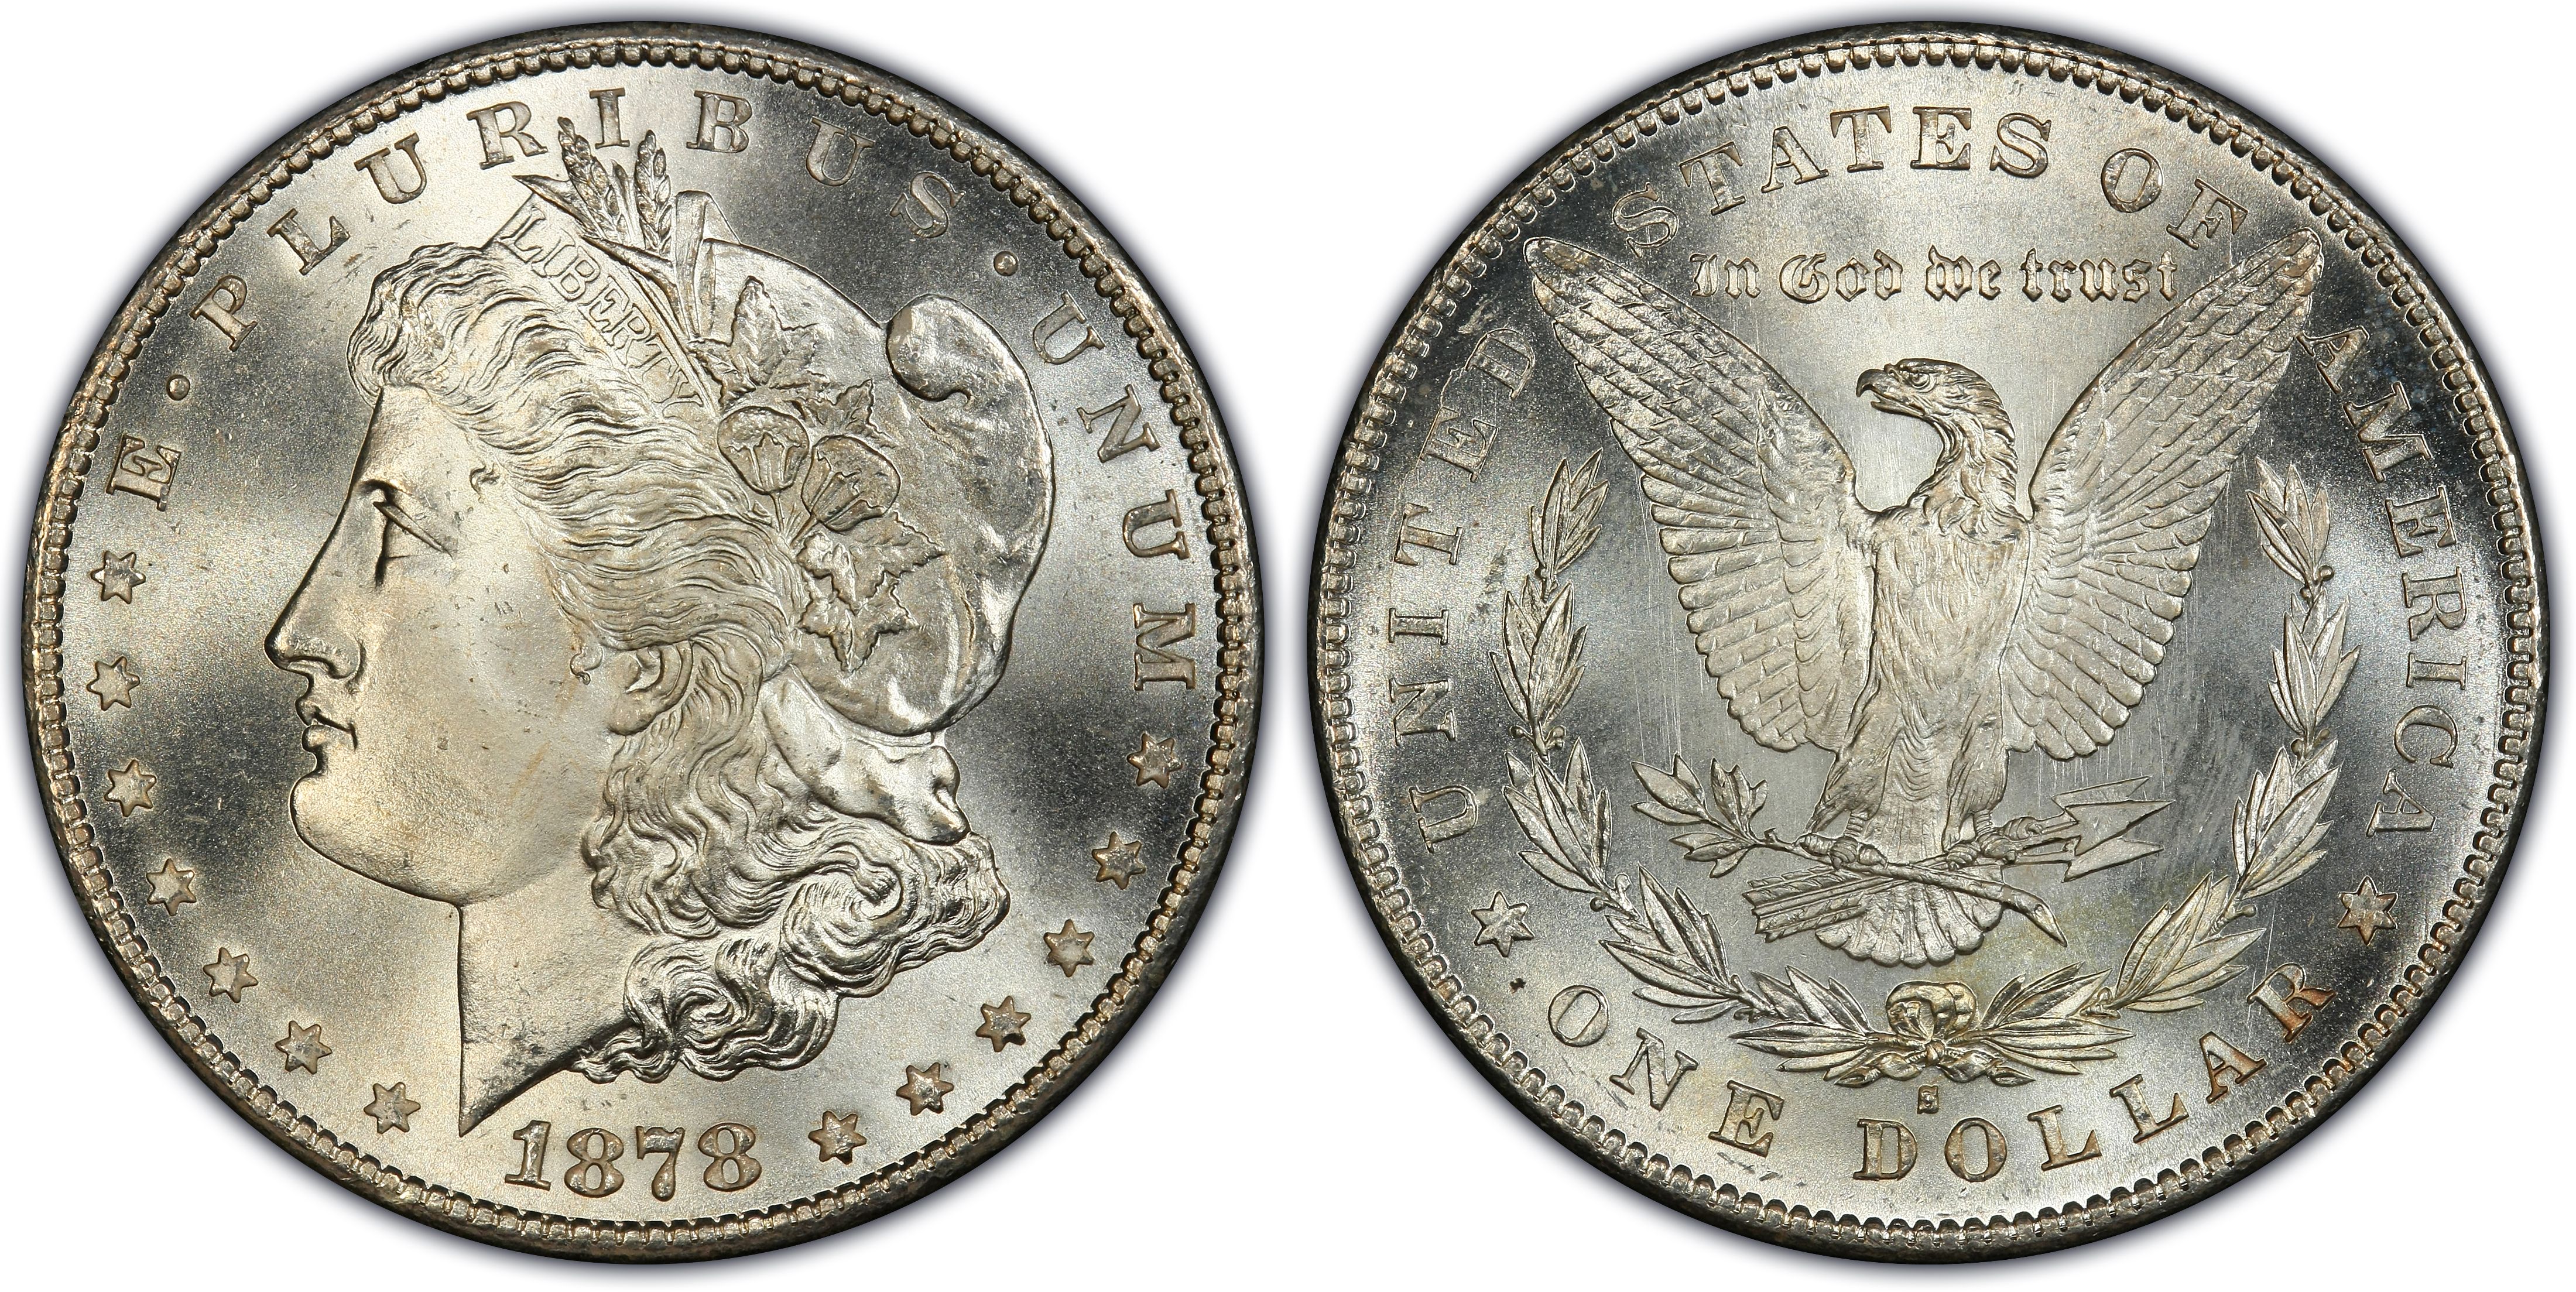 1878-S $1 (Regular Strike) Morgan Dollar - PCGS CoinFacts